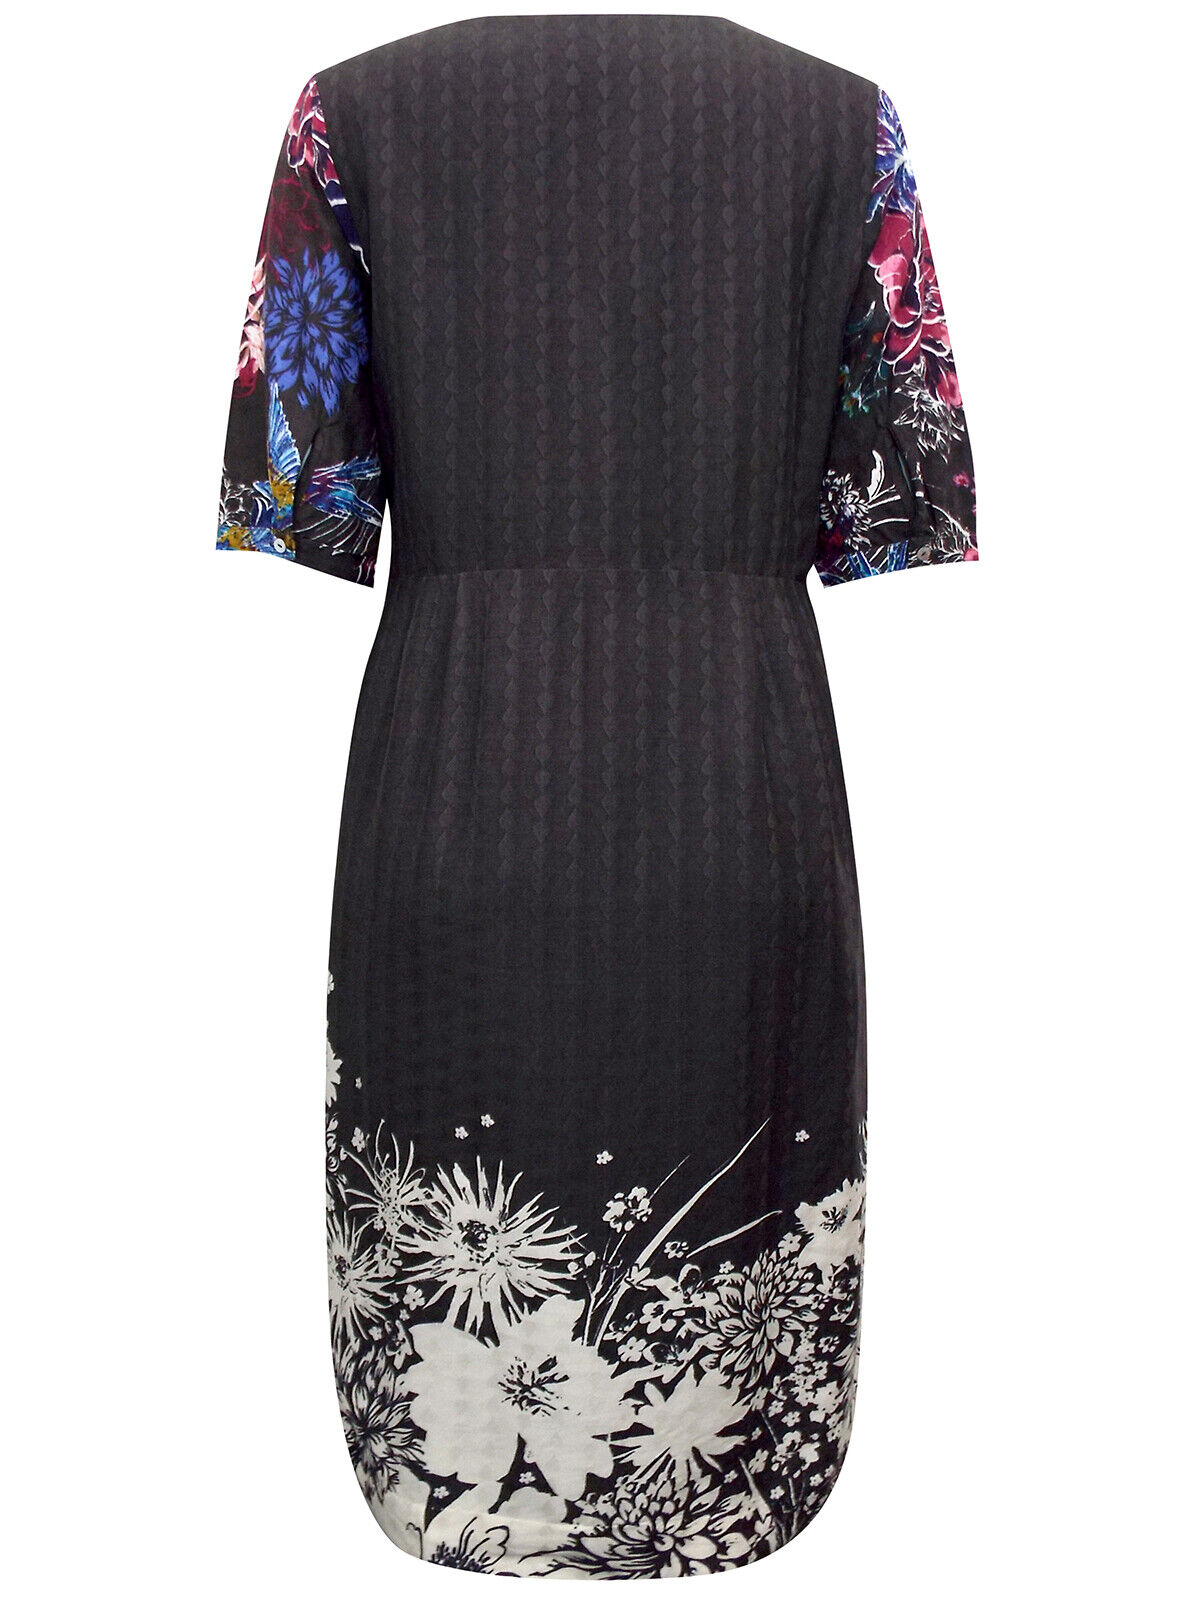 EX WHITE STUFF Charcoal Multi Print Erina OVERSIZED Woven Dress Size 10  RRP £75